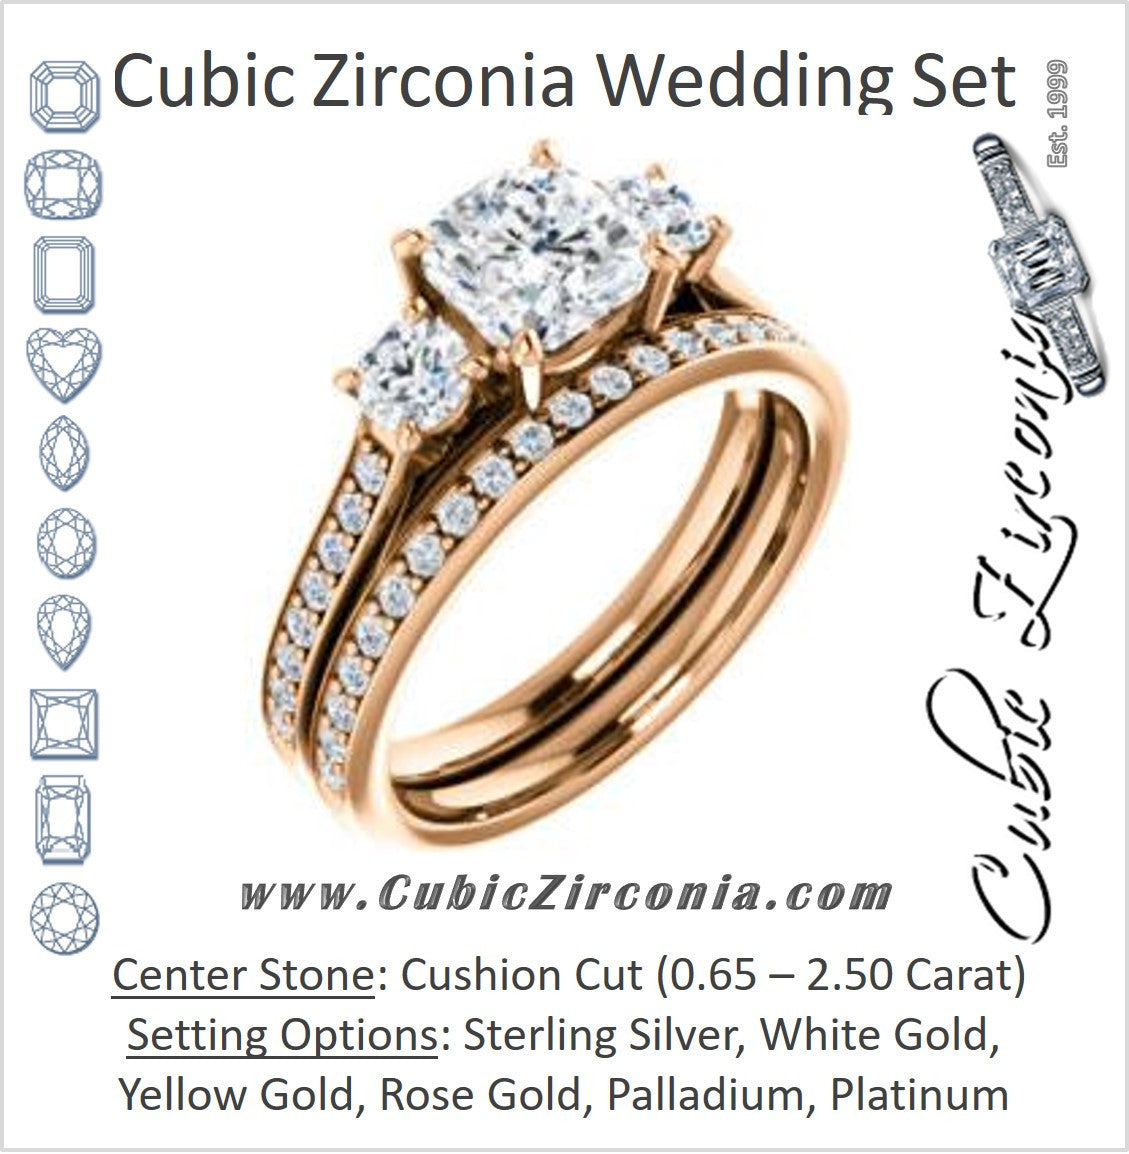 CZ Wedding Set, featuring The Tess engagement ring (Customizable Cushion Cut Trellis-Enhanced Bridge Setting with Semi-Pavé Band)